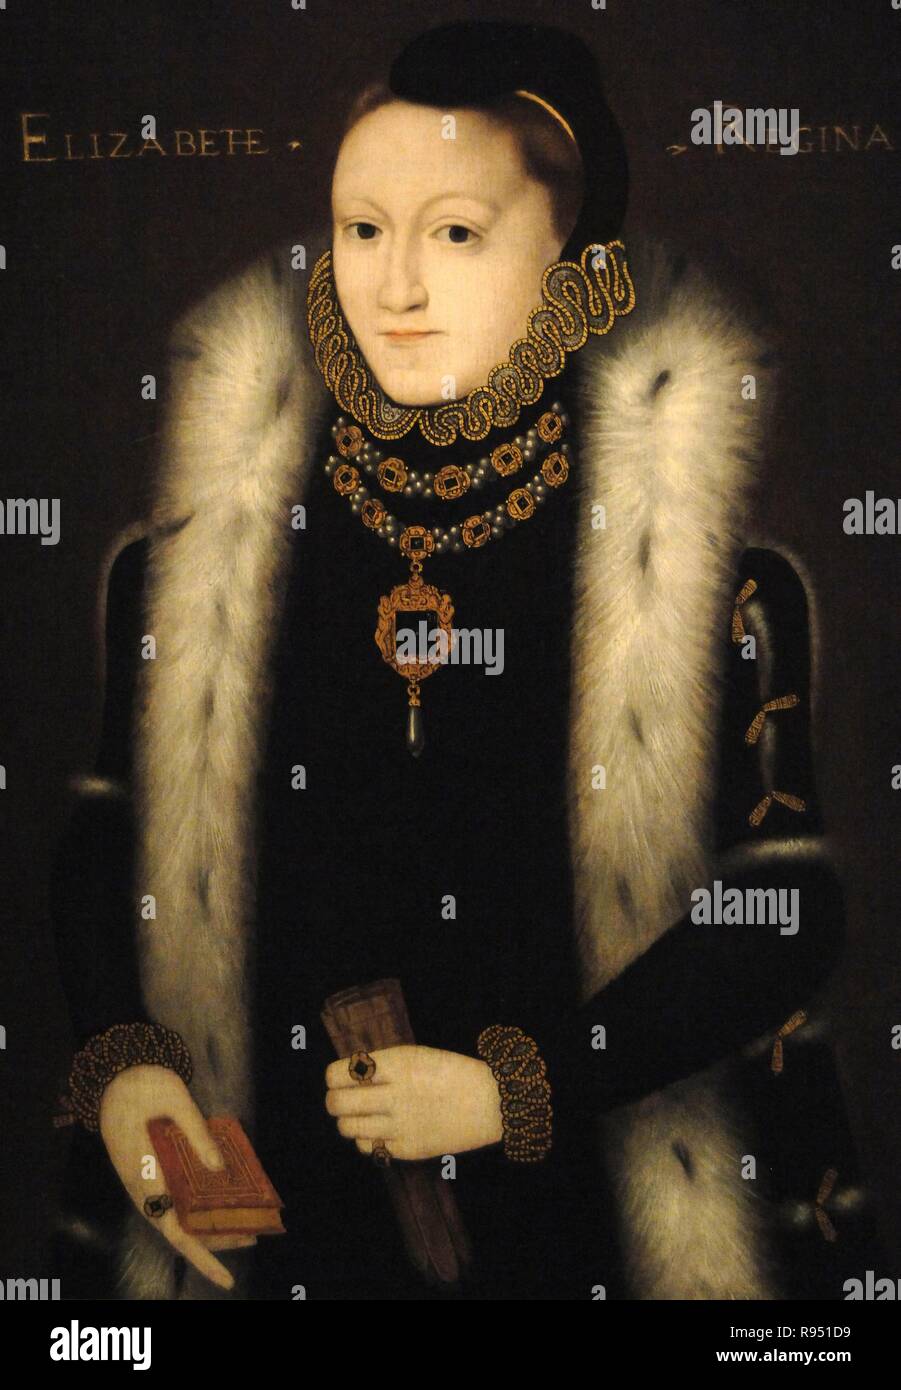 (Elizabeth I) Maalouf. Reine d'Angleterre et l'Irlande (1558-1603). Portrait (1558). Anonyme. National Portrait Gallery. Washington DC. United States. Banque D'Images